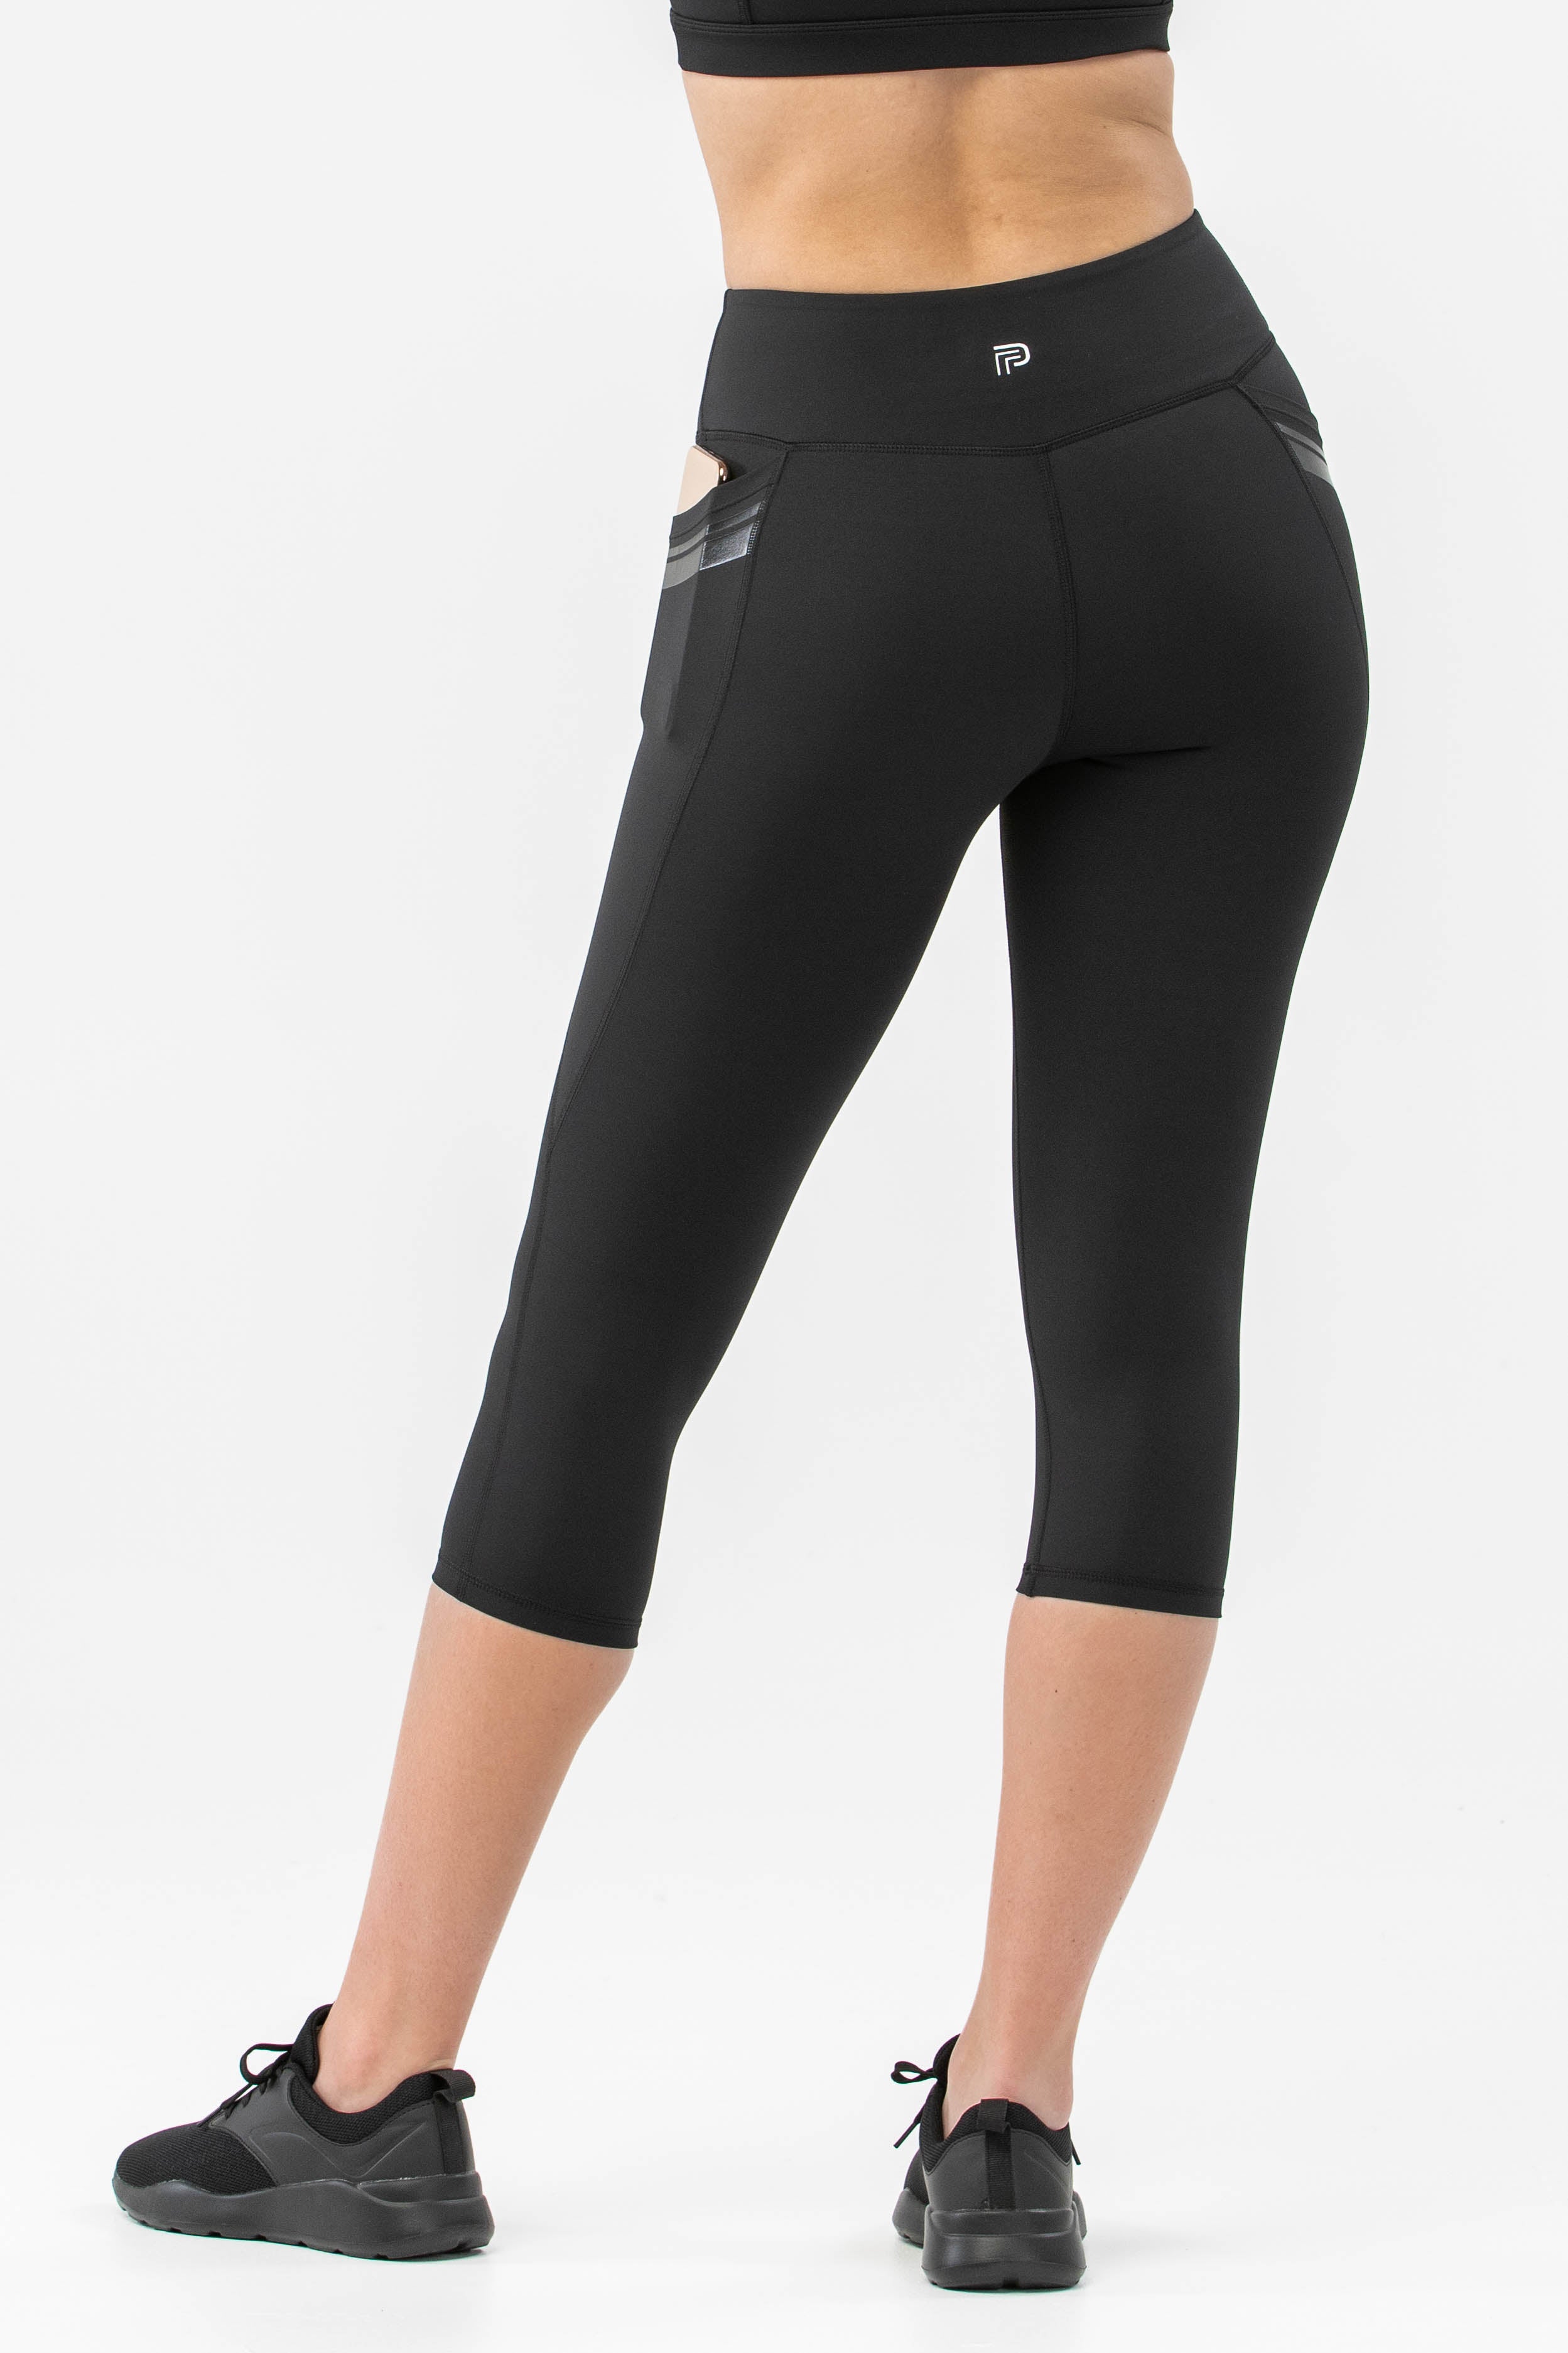 Black Lululemon leggings. , Size 4, Pockets on both